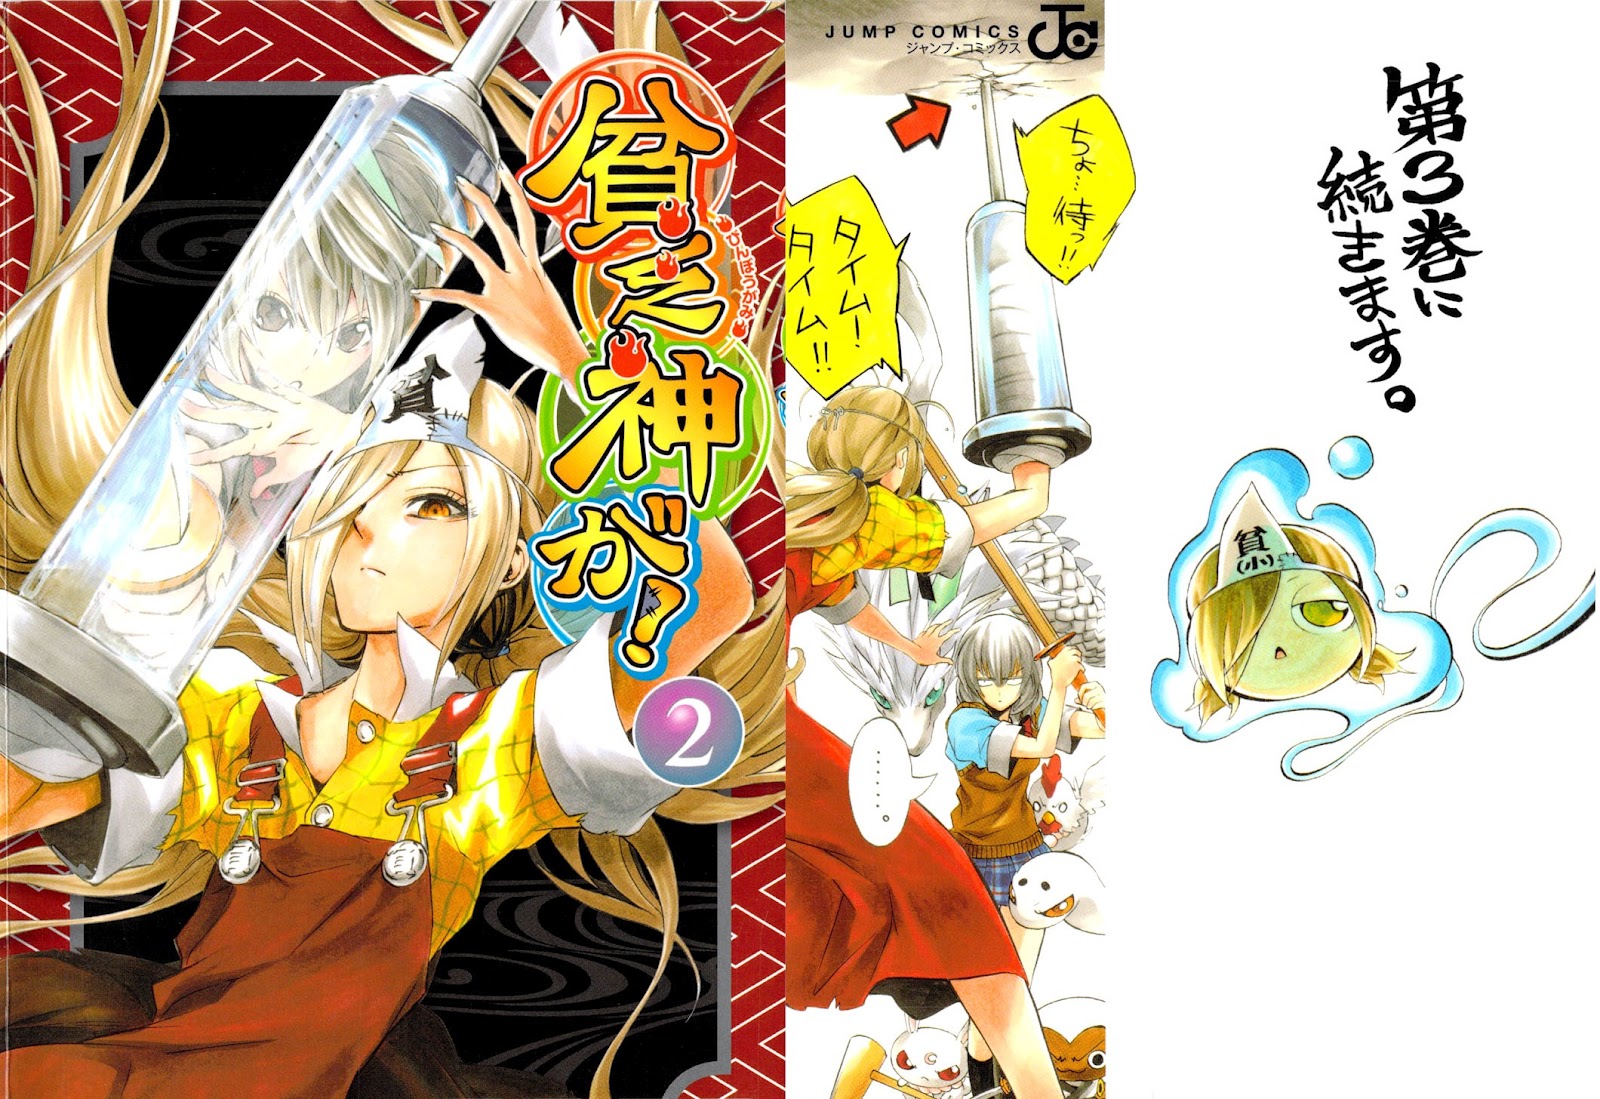 Binbougami Ga! Volume 2 Front Cover Anime Wallpaper